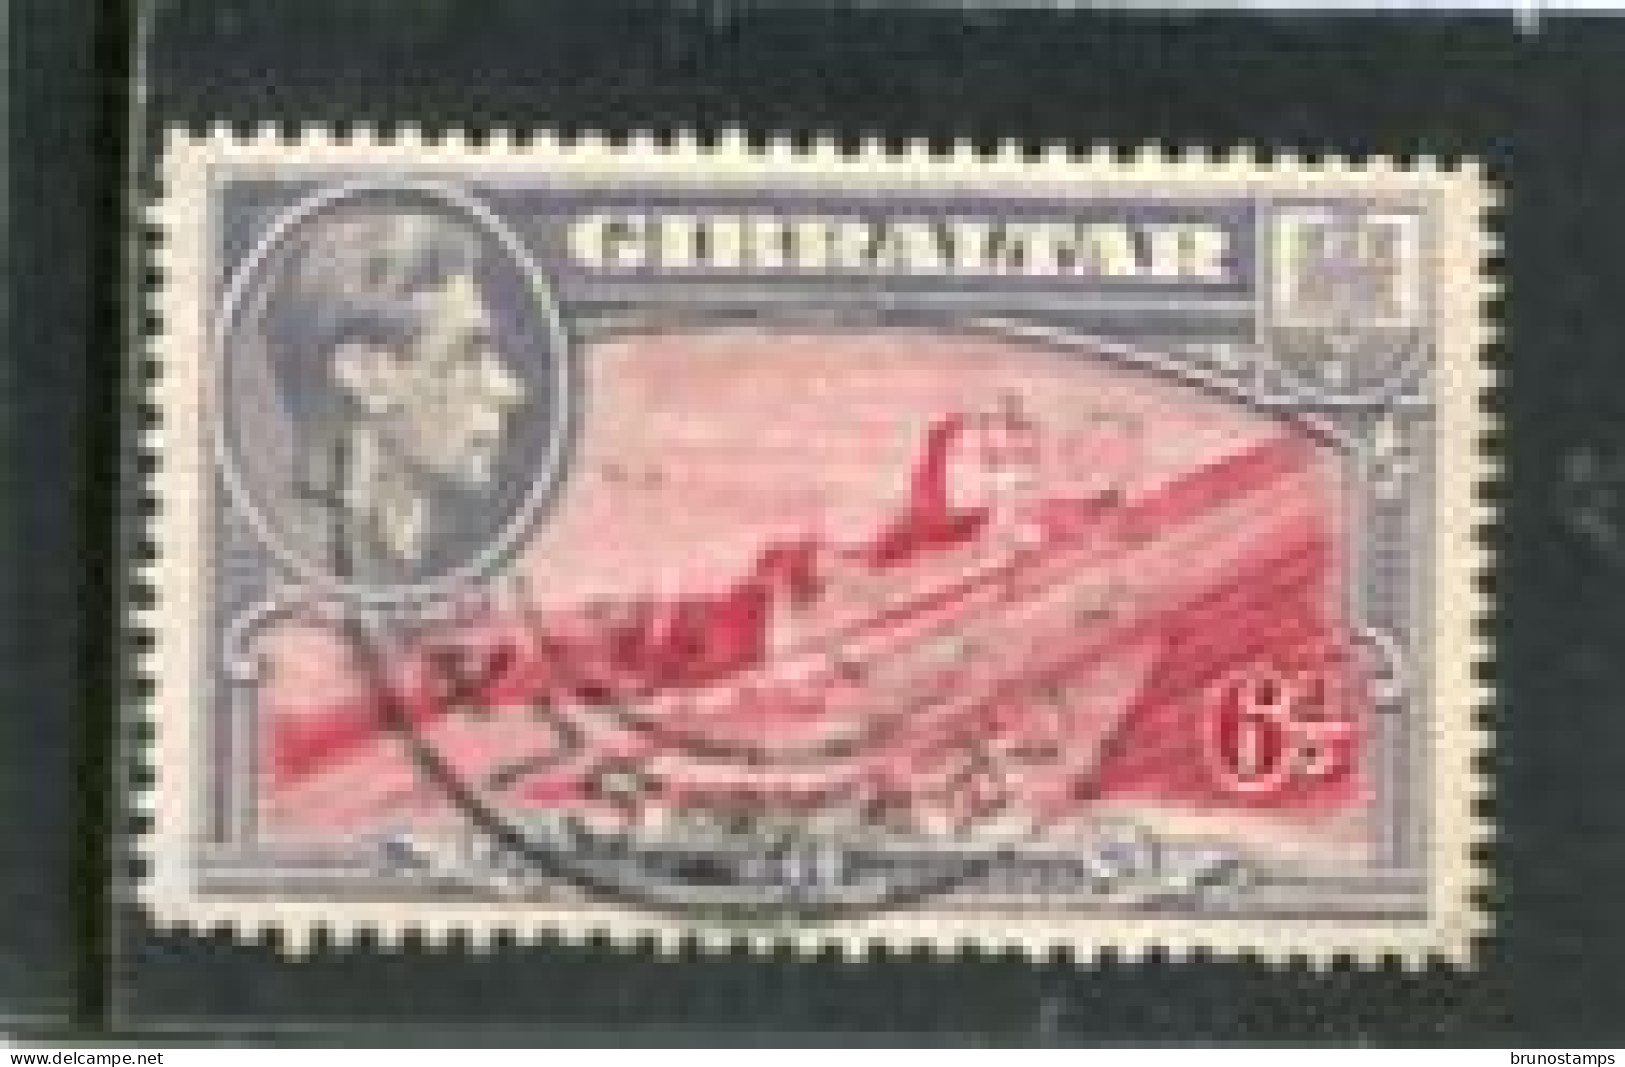 GIBRALTAR - 1938  GEORGE VI   6d  PERF 14  FINE USED - Gibraltar